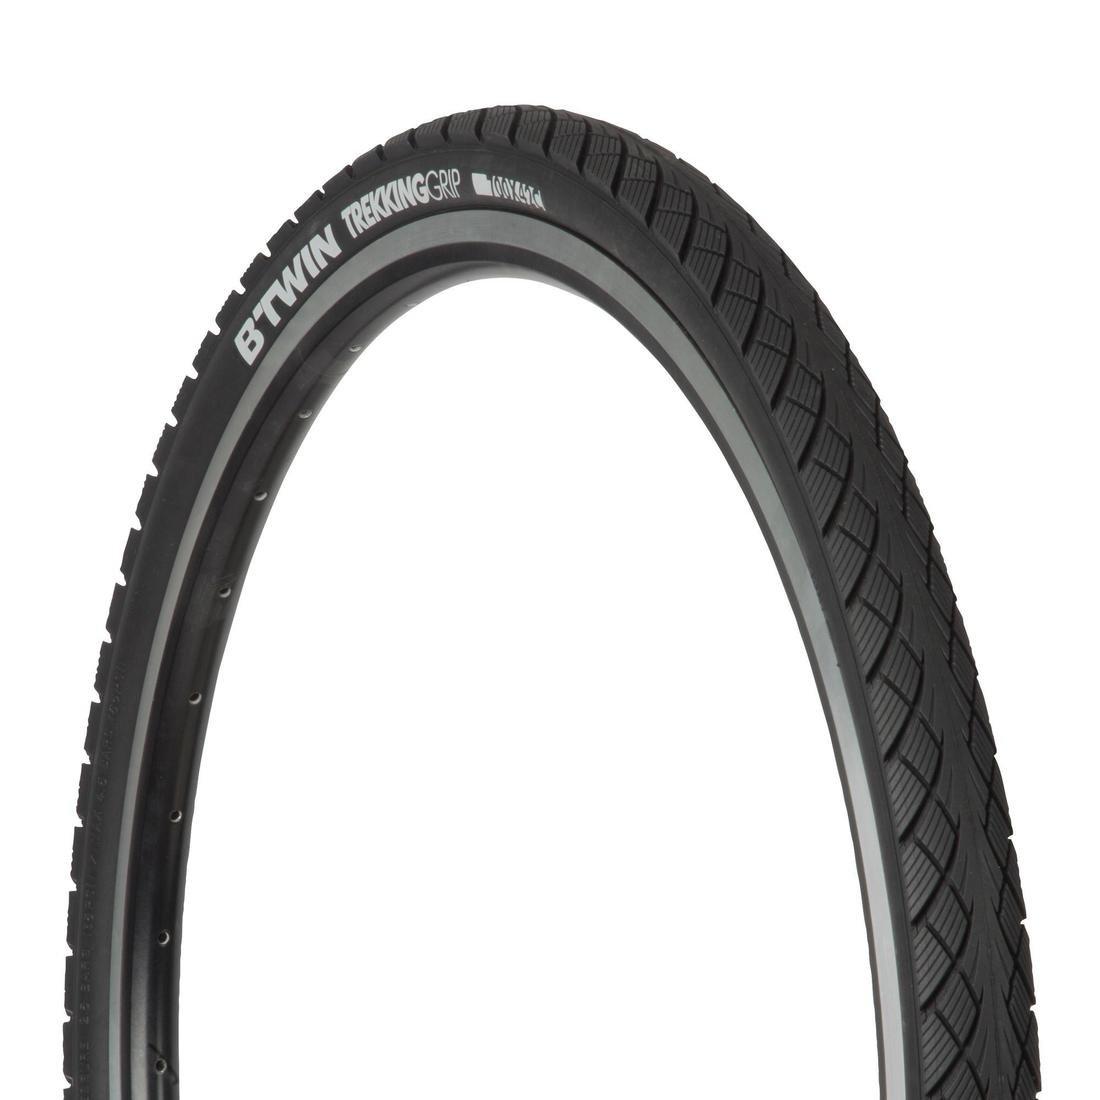 BTWIN - Trekking Grip Hybrid Bike Tyre